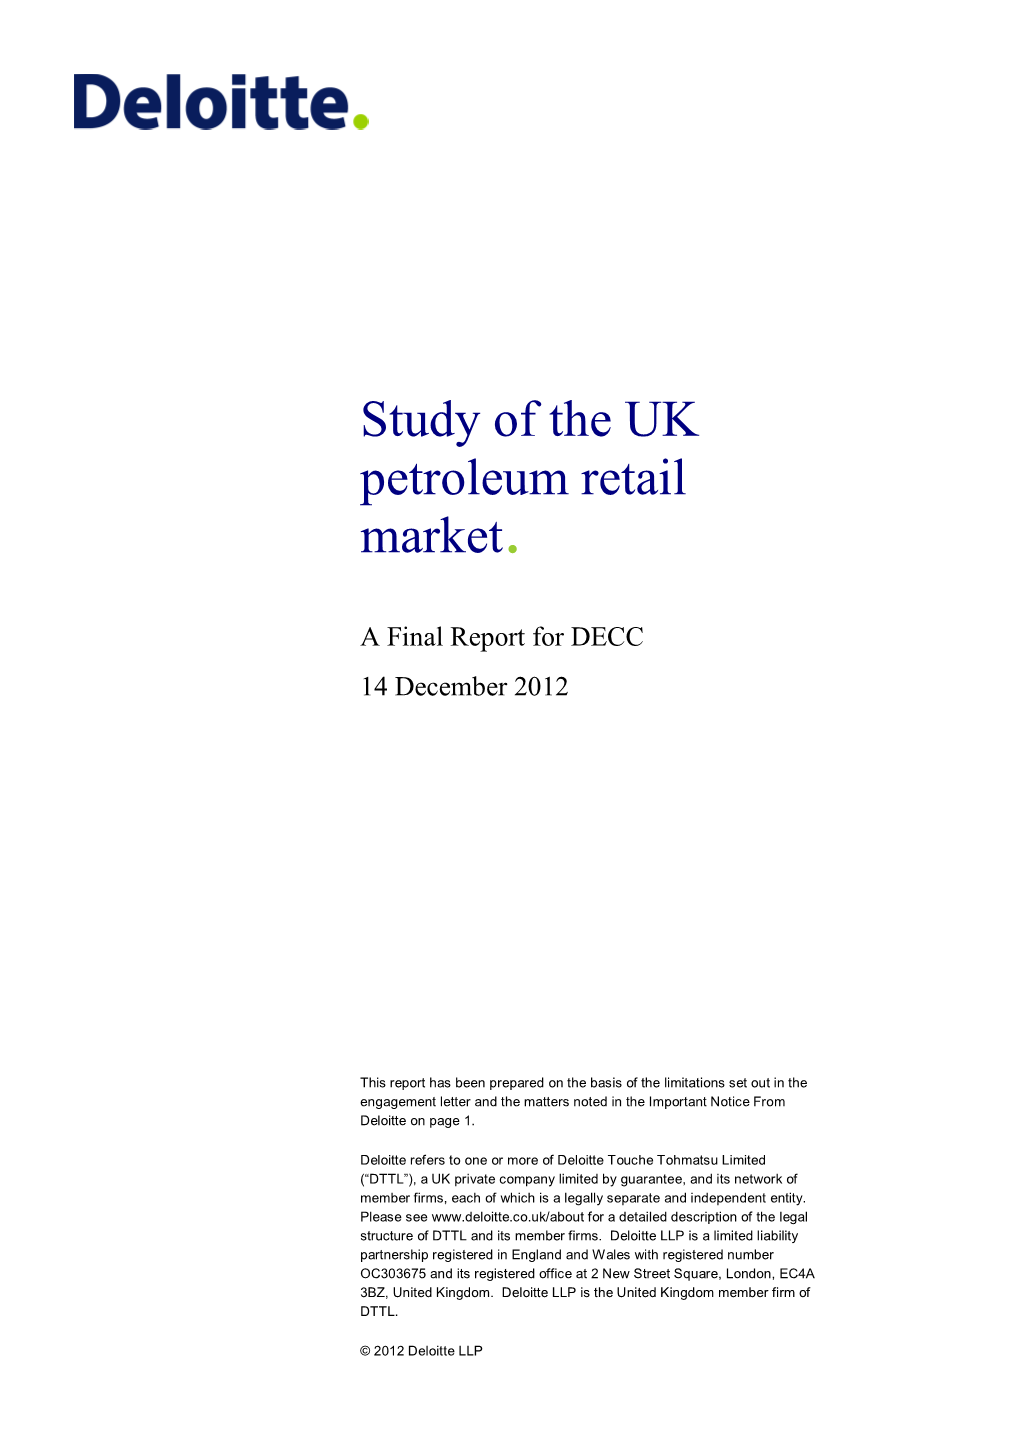 Study of the UK Petroleum Retail Market